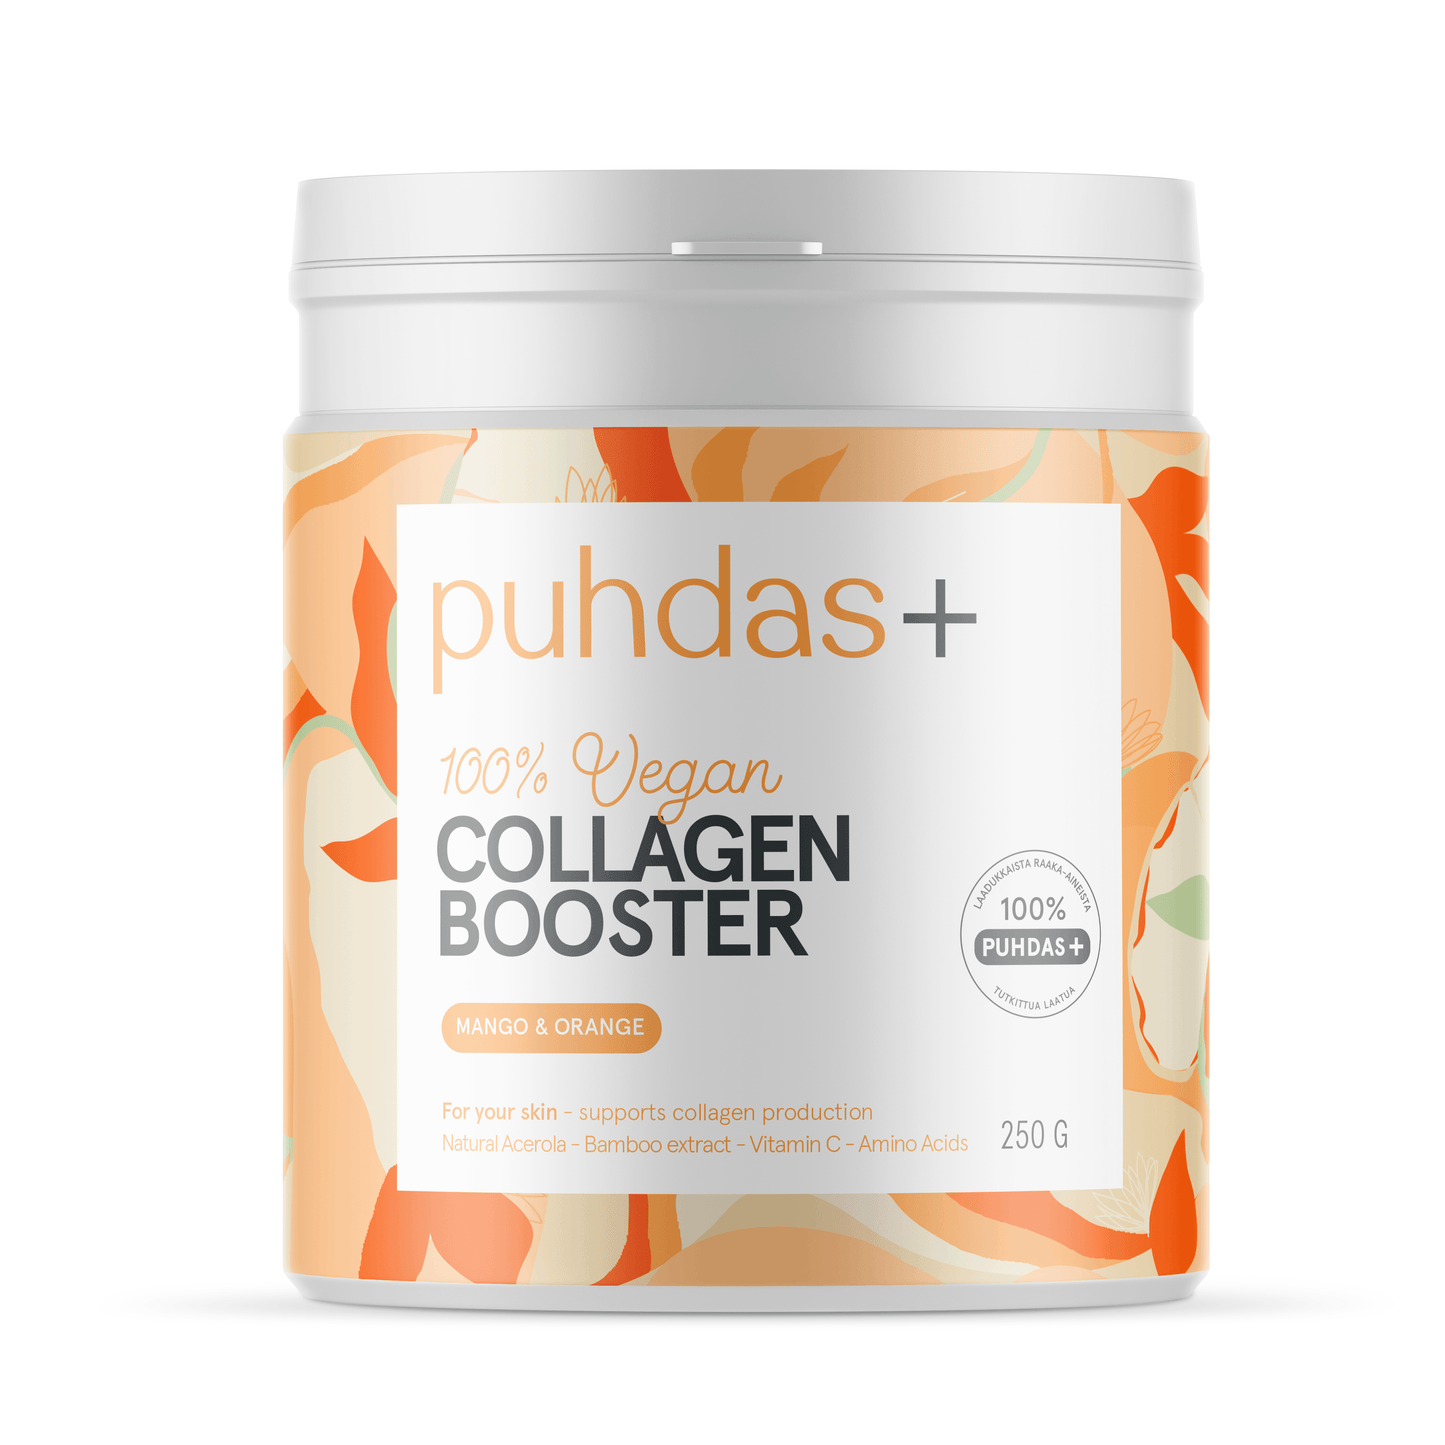 Puhdas+ Collagen Booster 100 % Vegan Mango & Orange